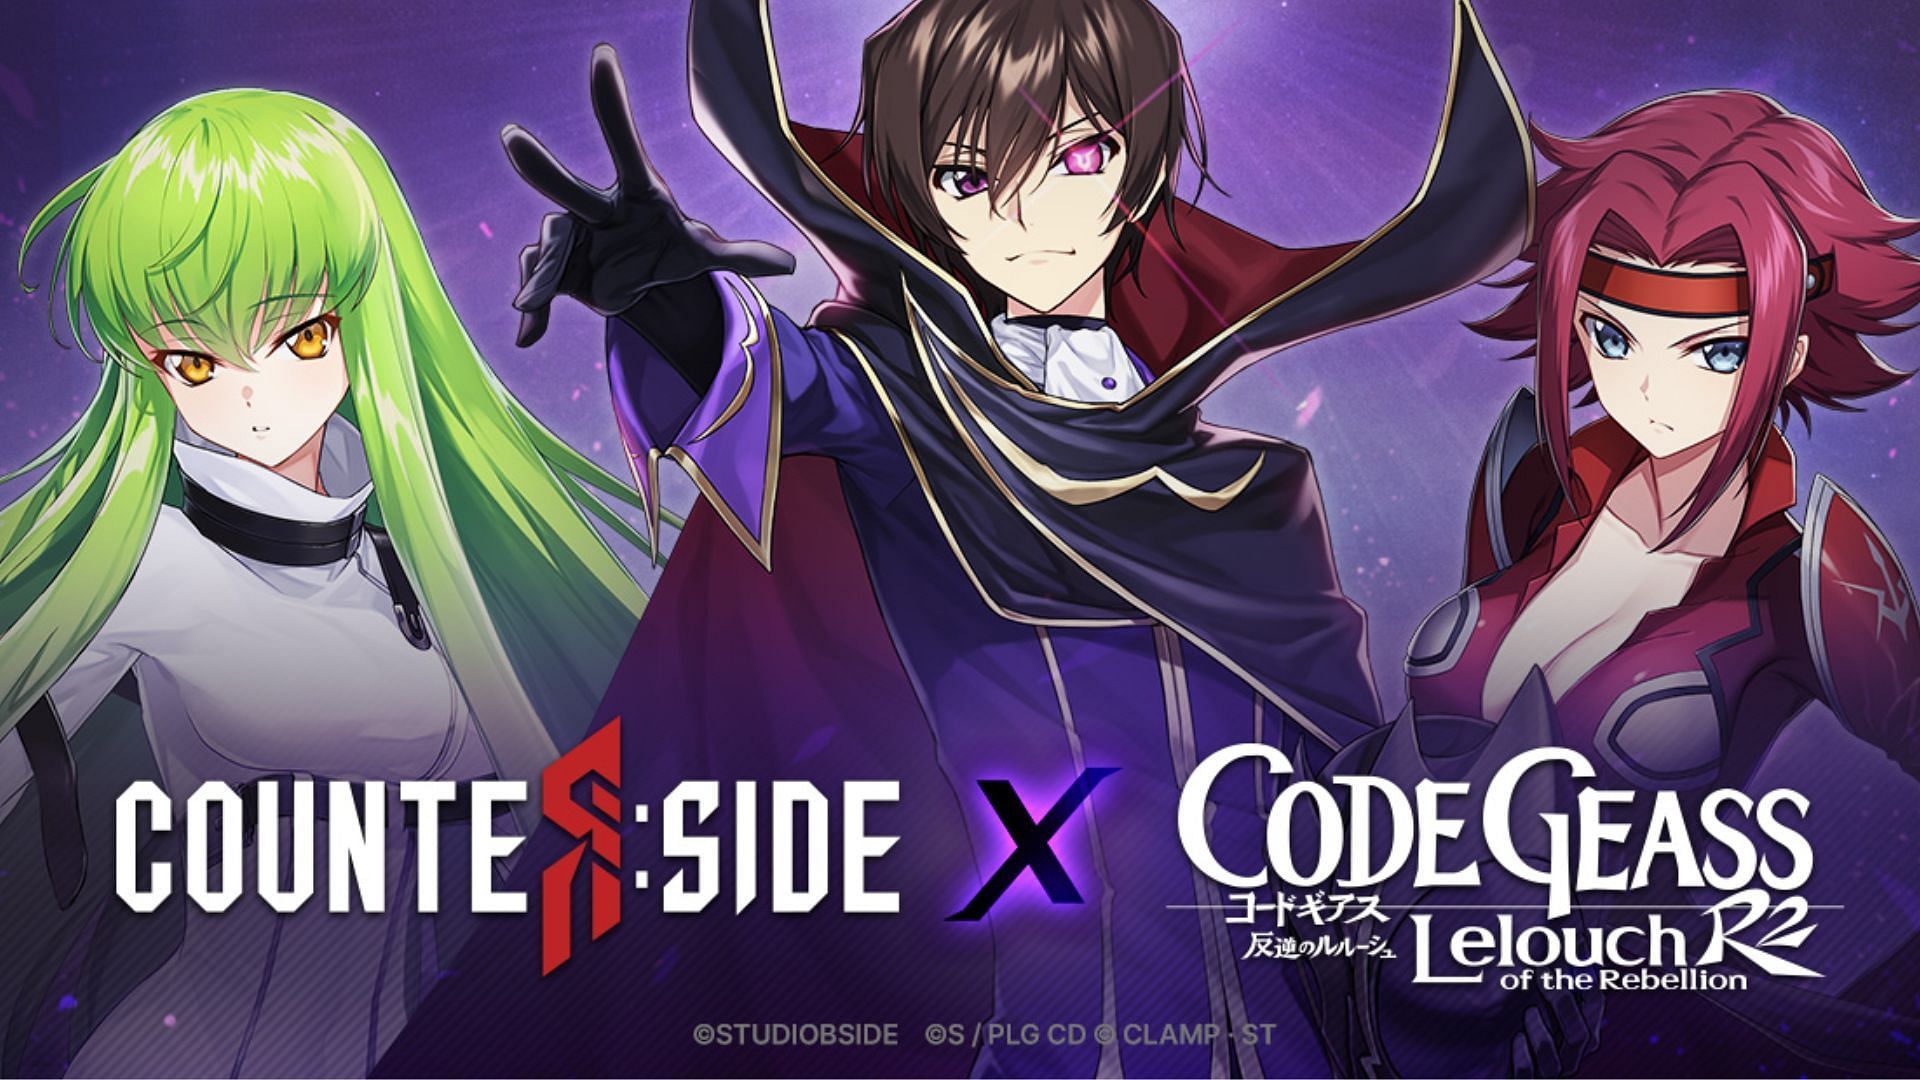 Code Geass Lelouch Gif  Code geass, Anime shows, Coding